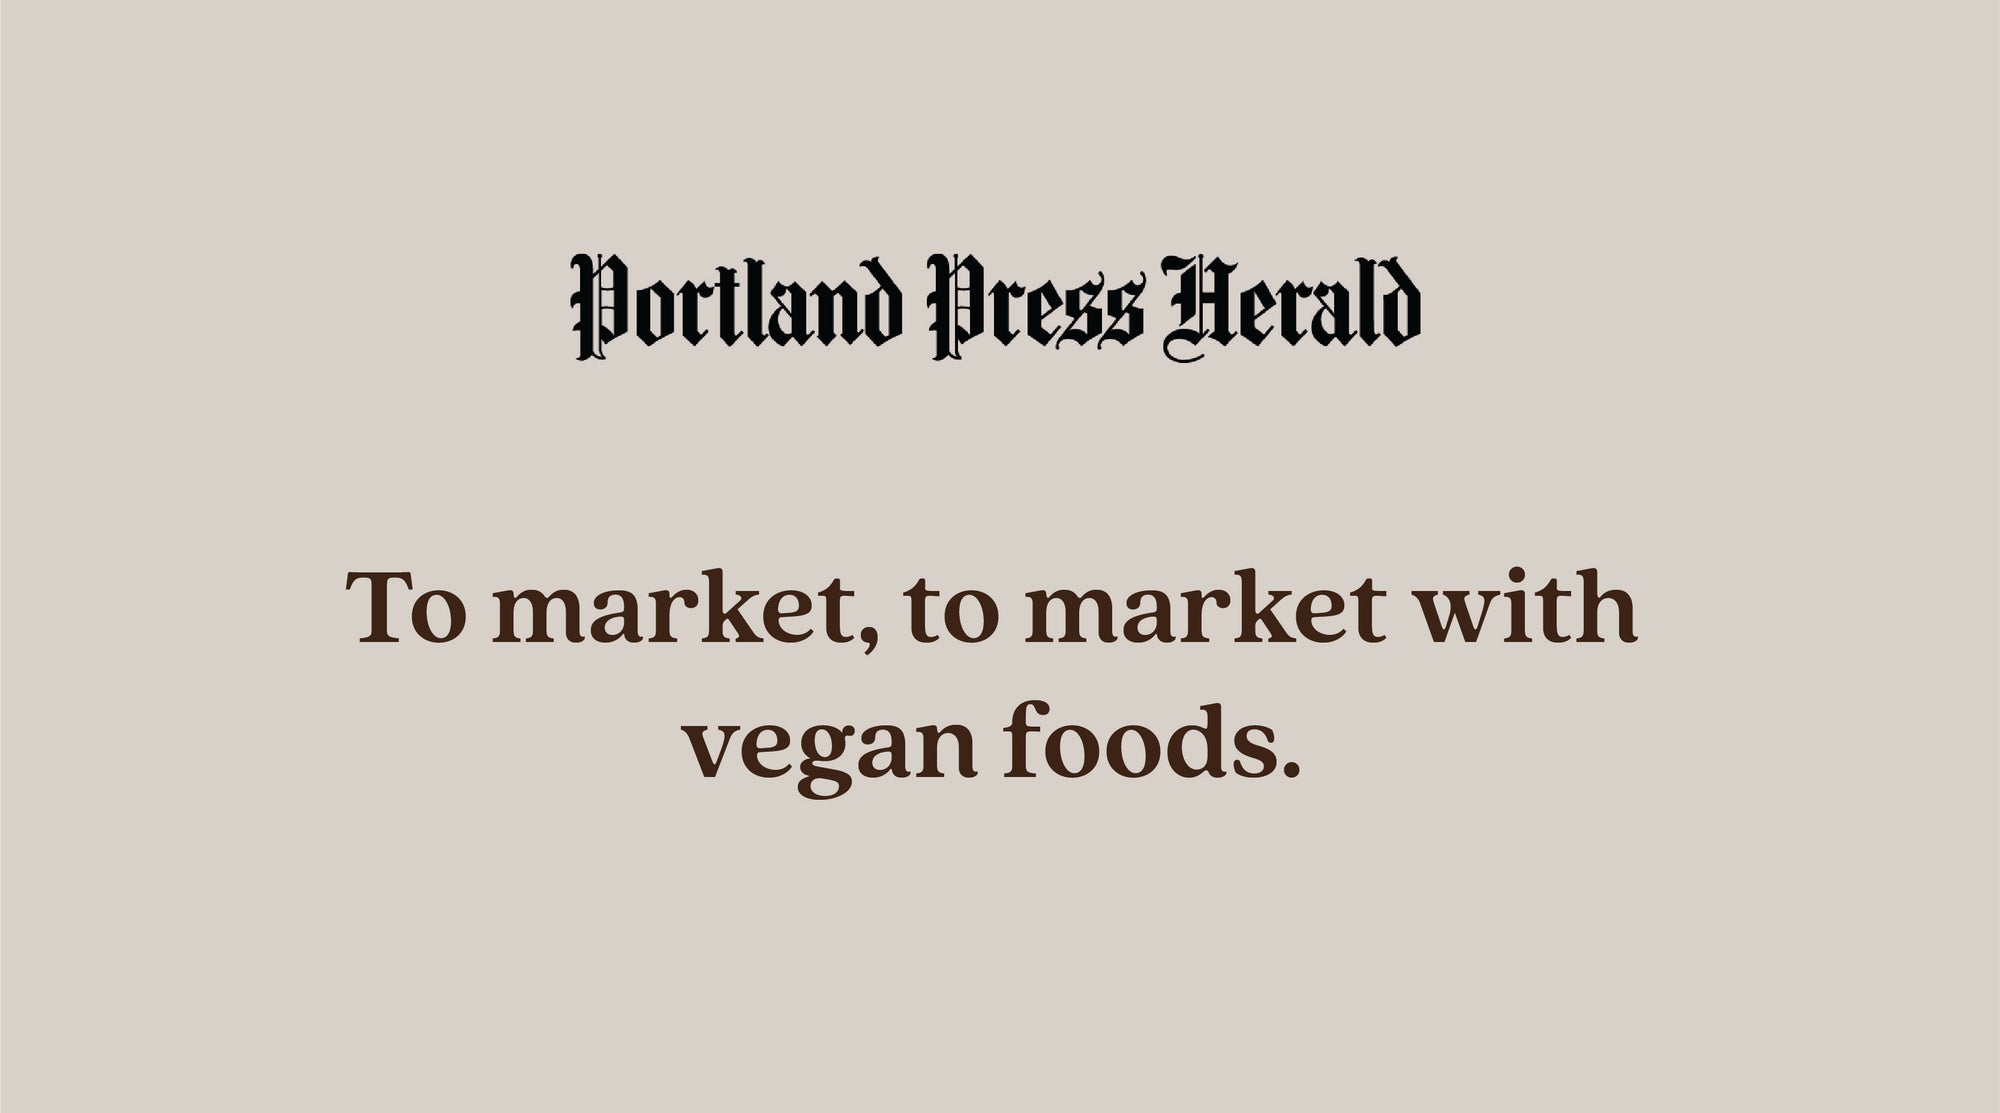 Portland Press Herald - To market with vegan foods